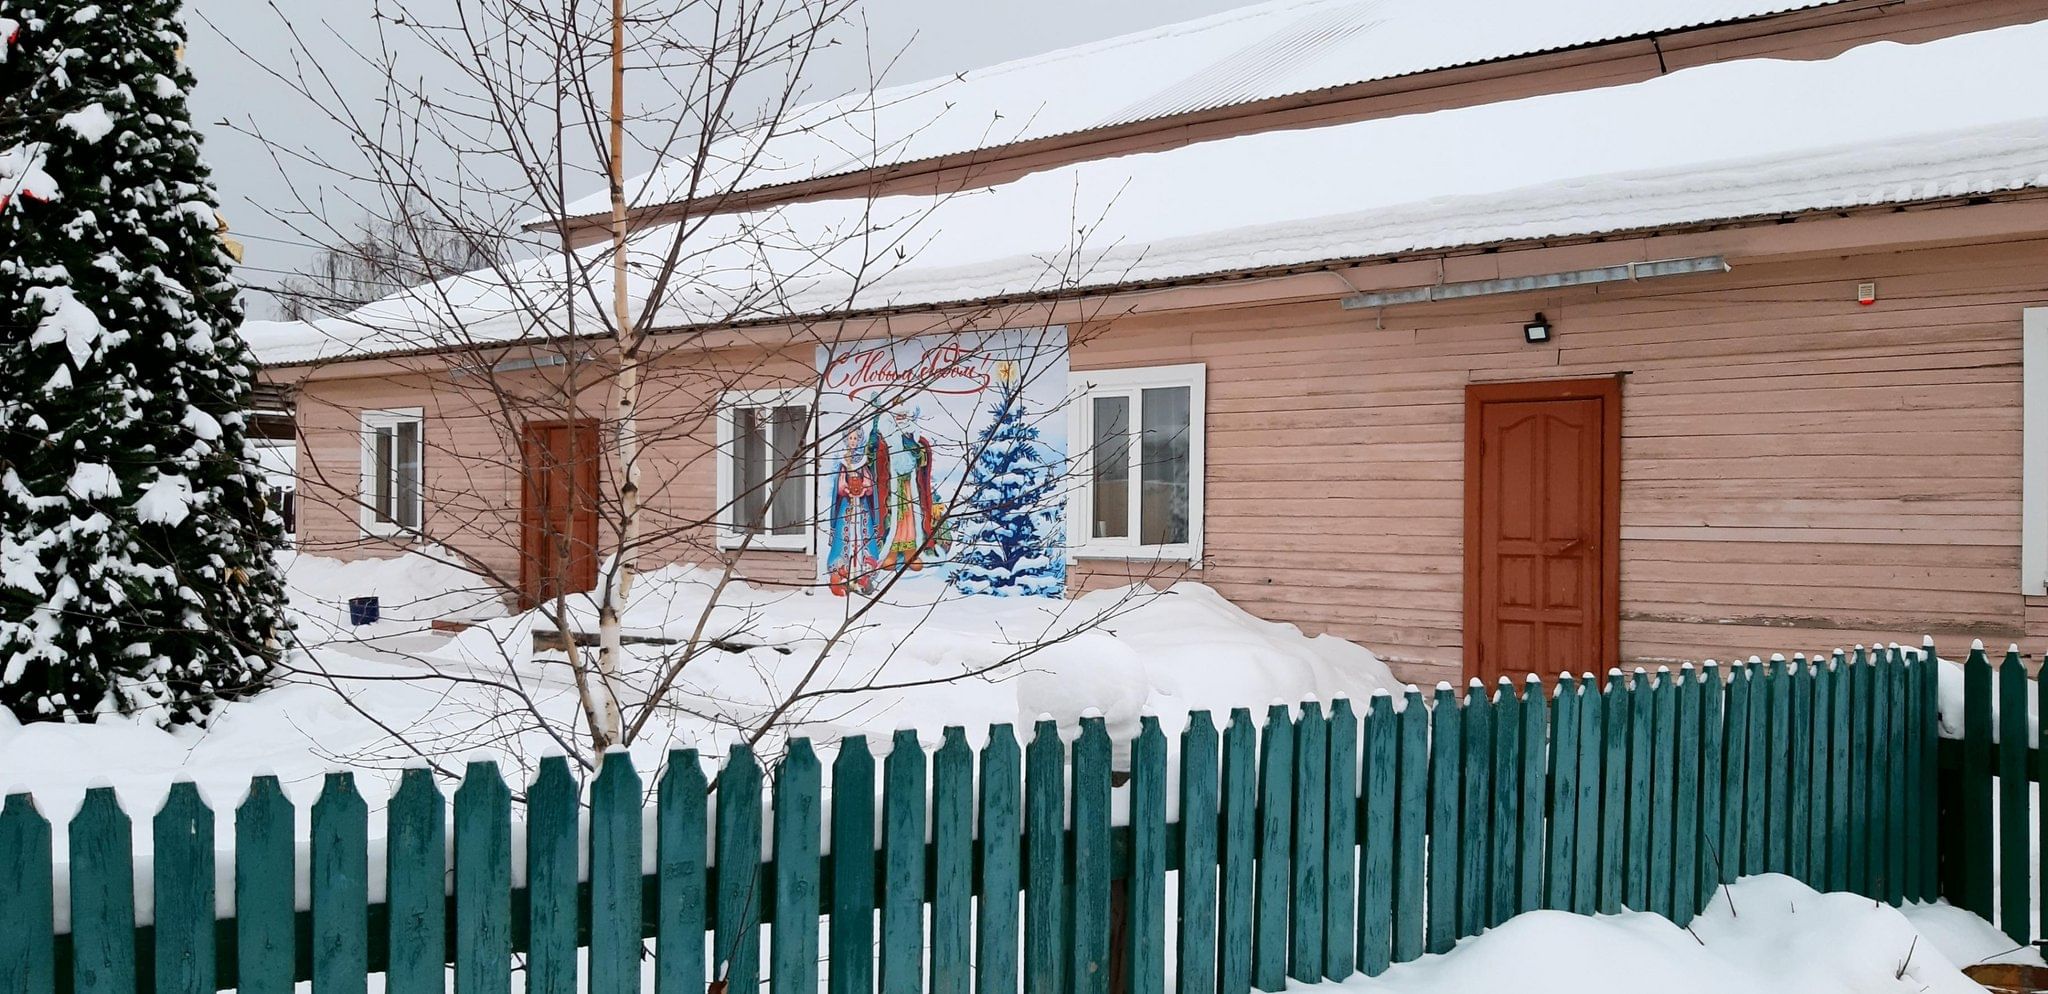 село богучаны красноярский край фото